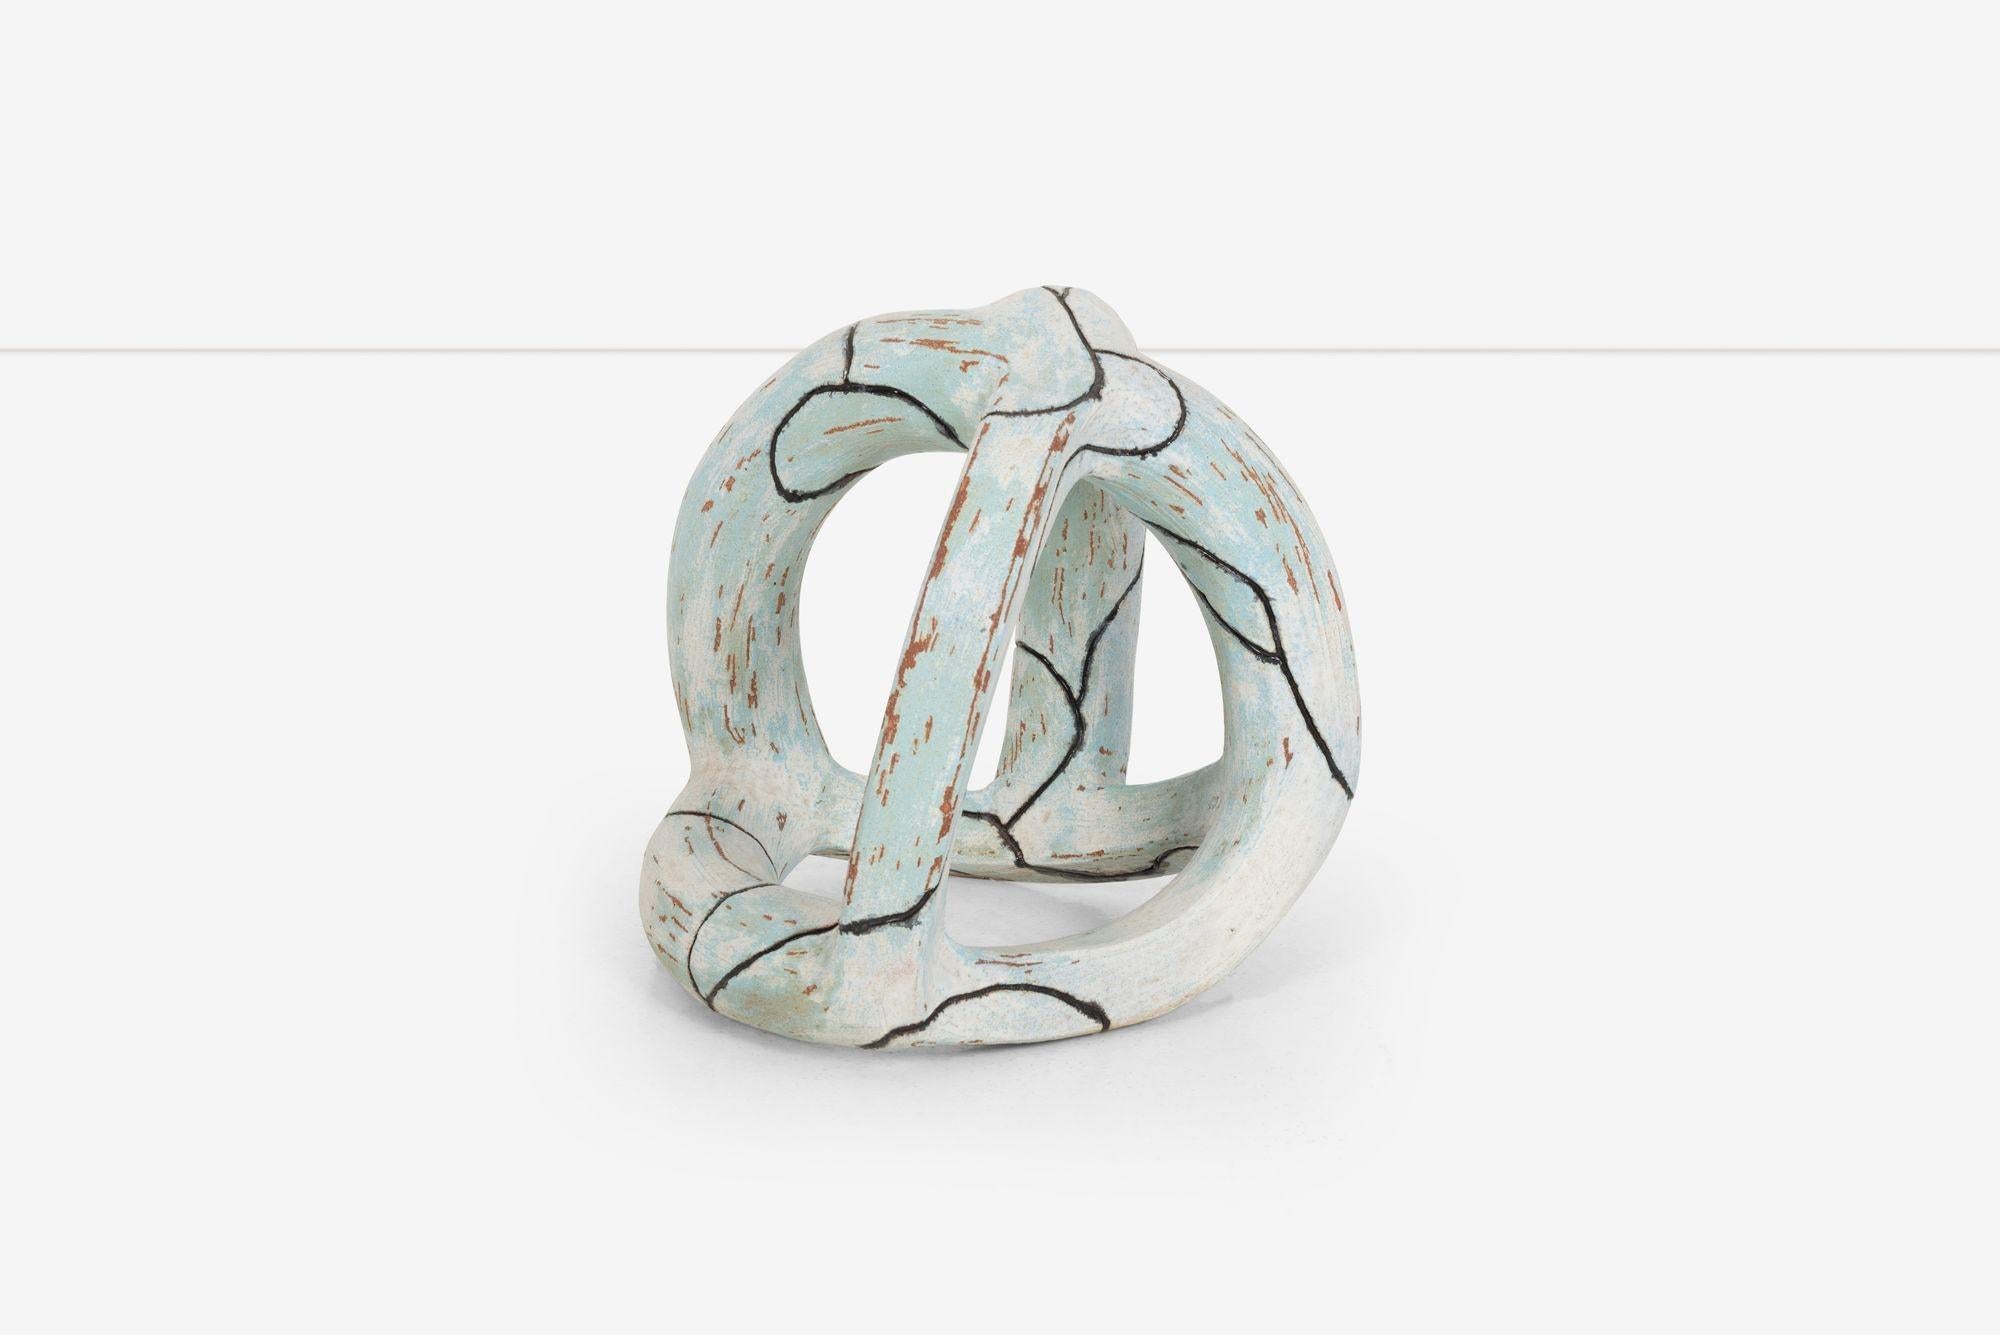 American Glazed Stoneware by Elena Rakochy 